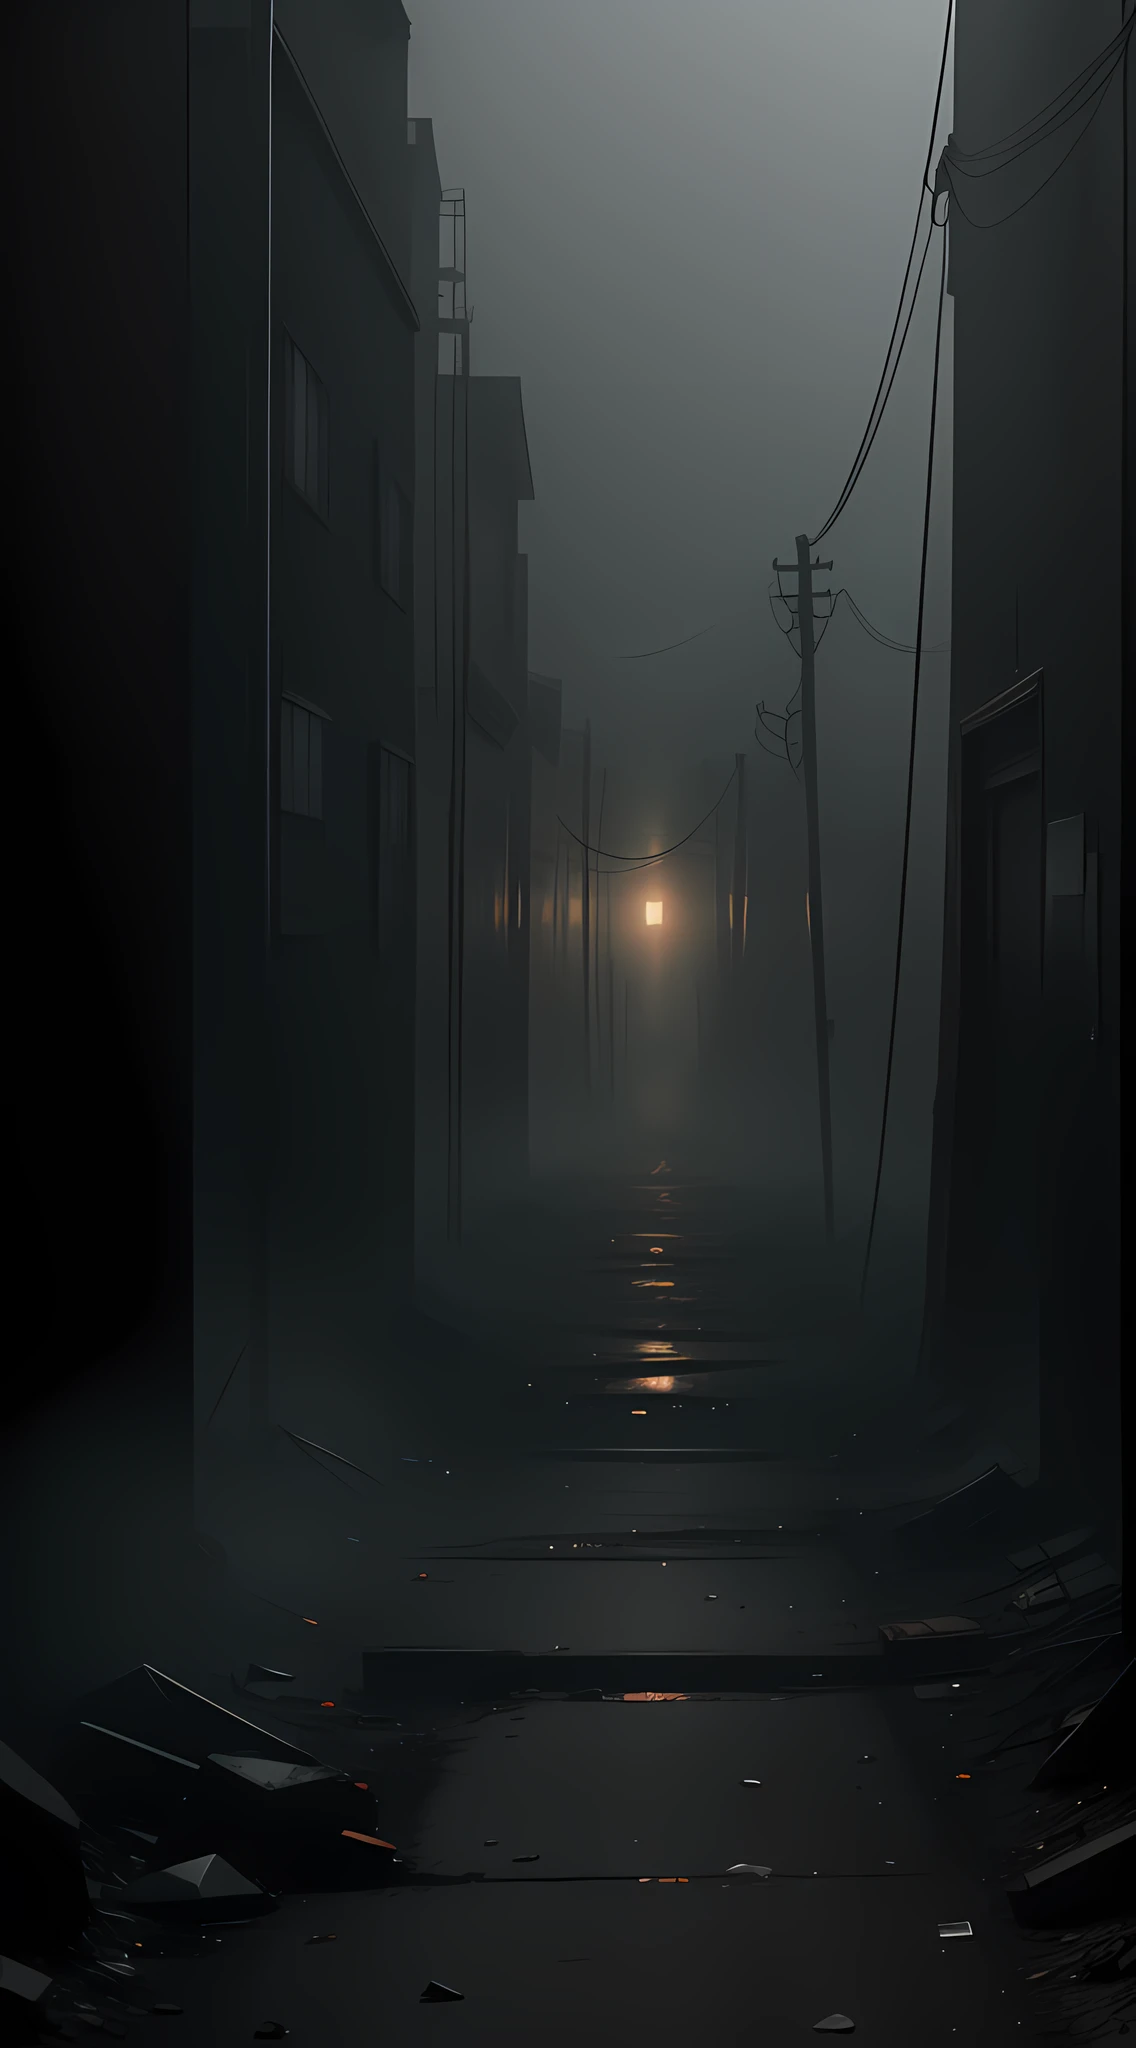 Centralia의 Silent Hill의 불안한 본질을 포착하는 전문적인 8K 사진 생성. 짙은 안개와 녹과 부패 요소를 추가하여 억압적인 분위기를 조성합니다. 왜곡된 카메라 앵글과 특이한 프레이밍을 사용하여 사일런트 힐 세계관의 특징인 방향 감각 상실과 공포감을 전달합니다